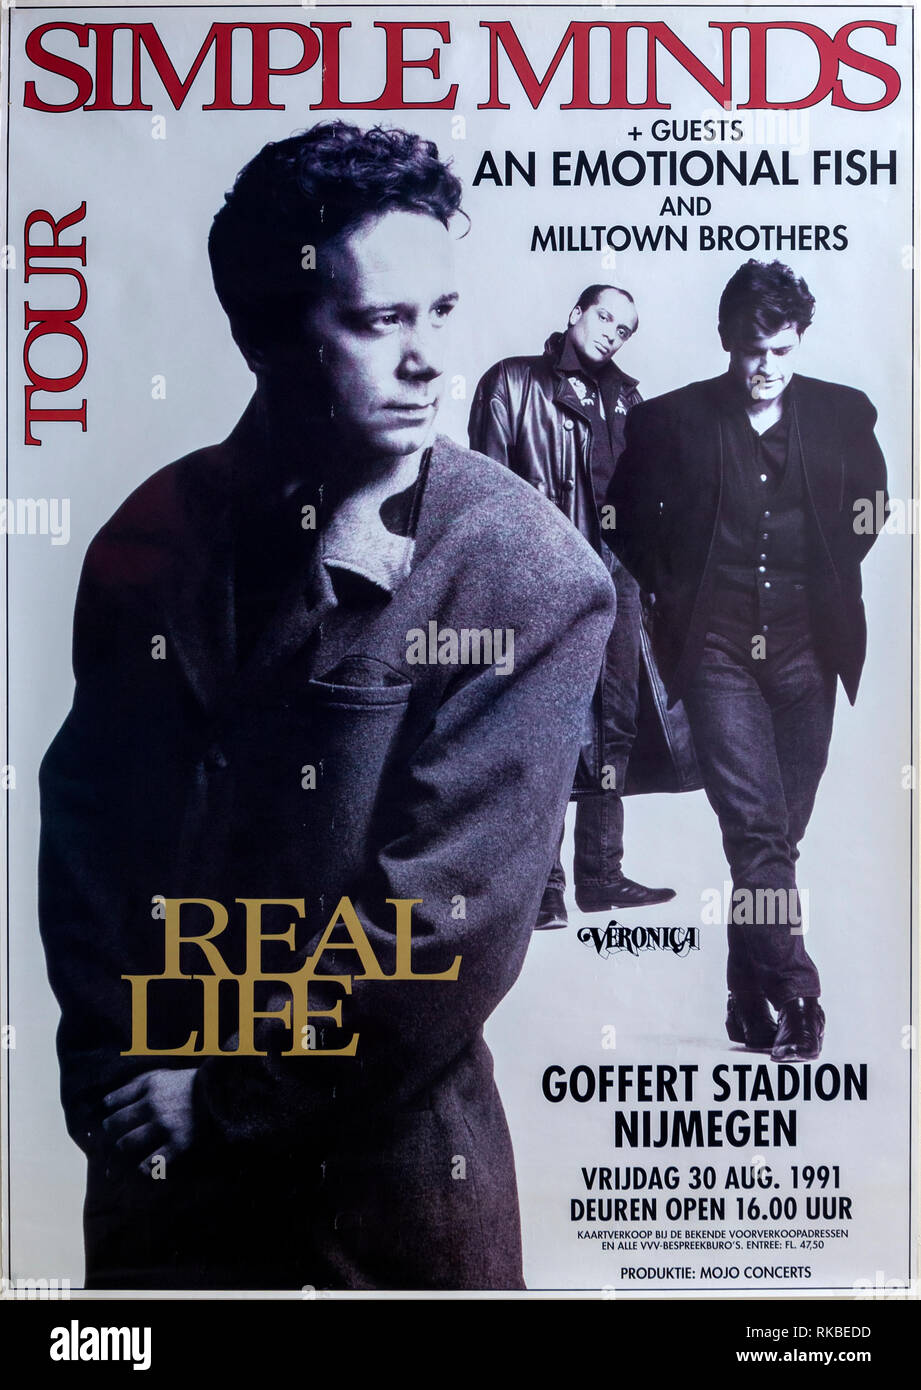 Simple Minds, Real Life tour, Nijmegen, 1991, Musical concert poster Stock Photo